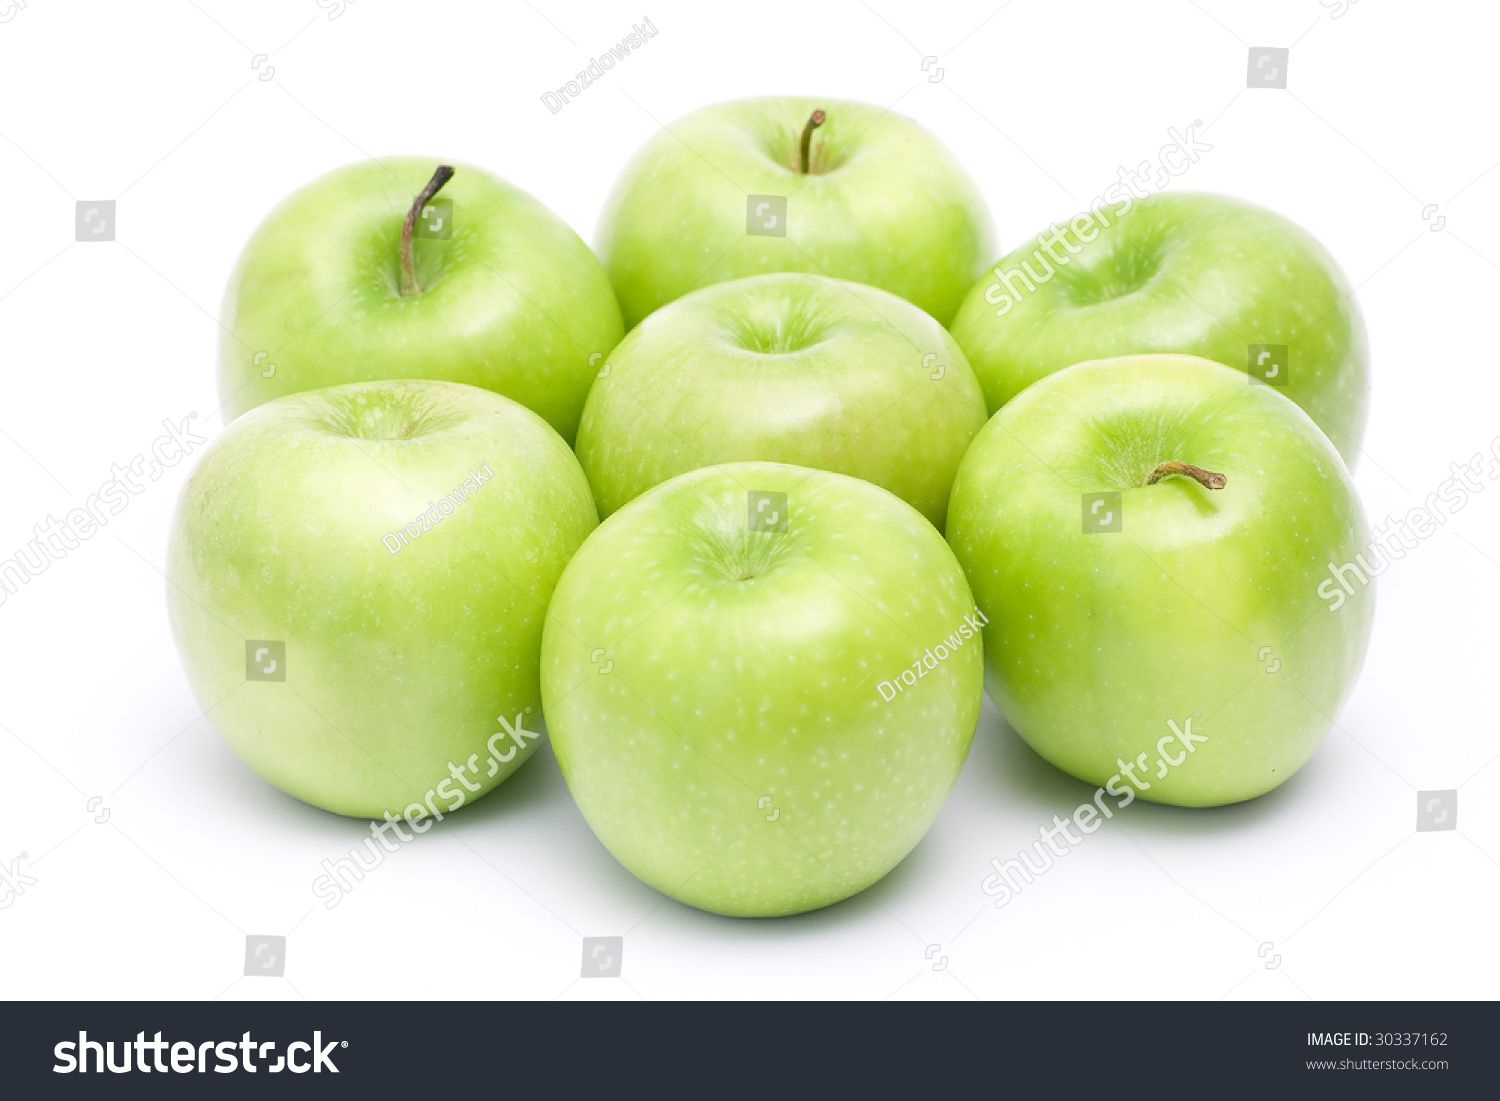 green apples #30337162